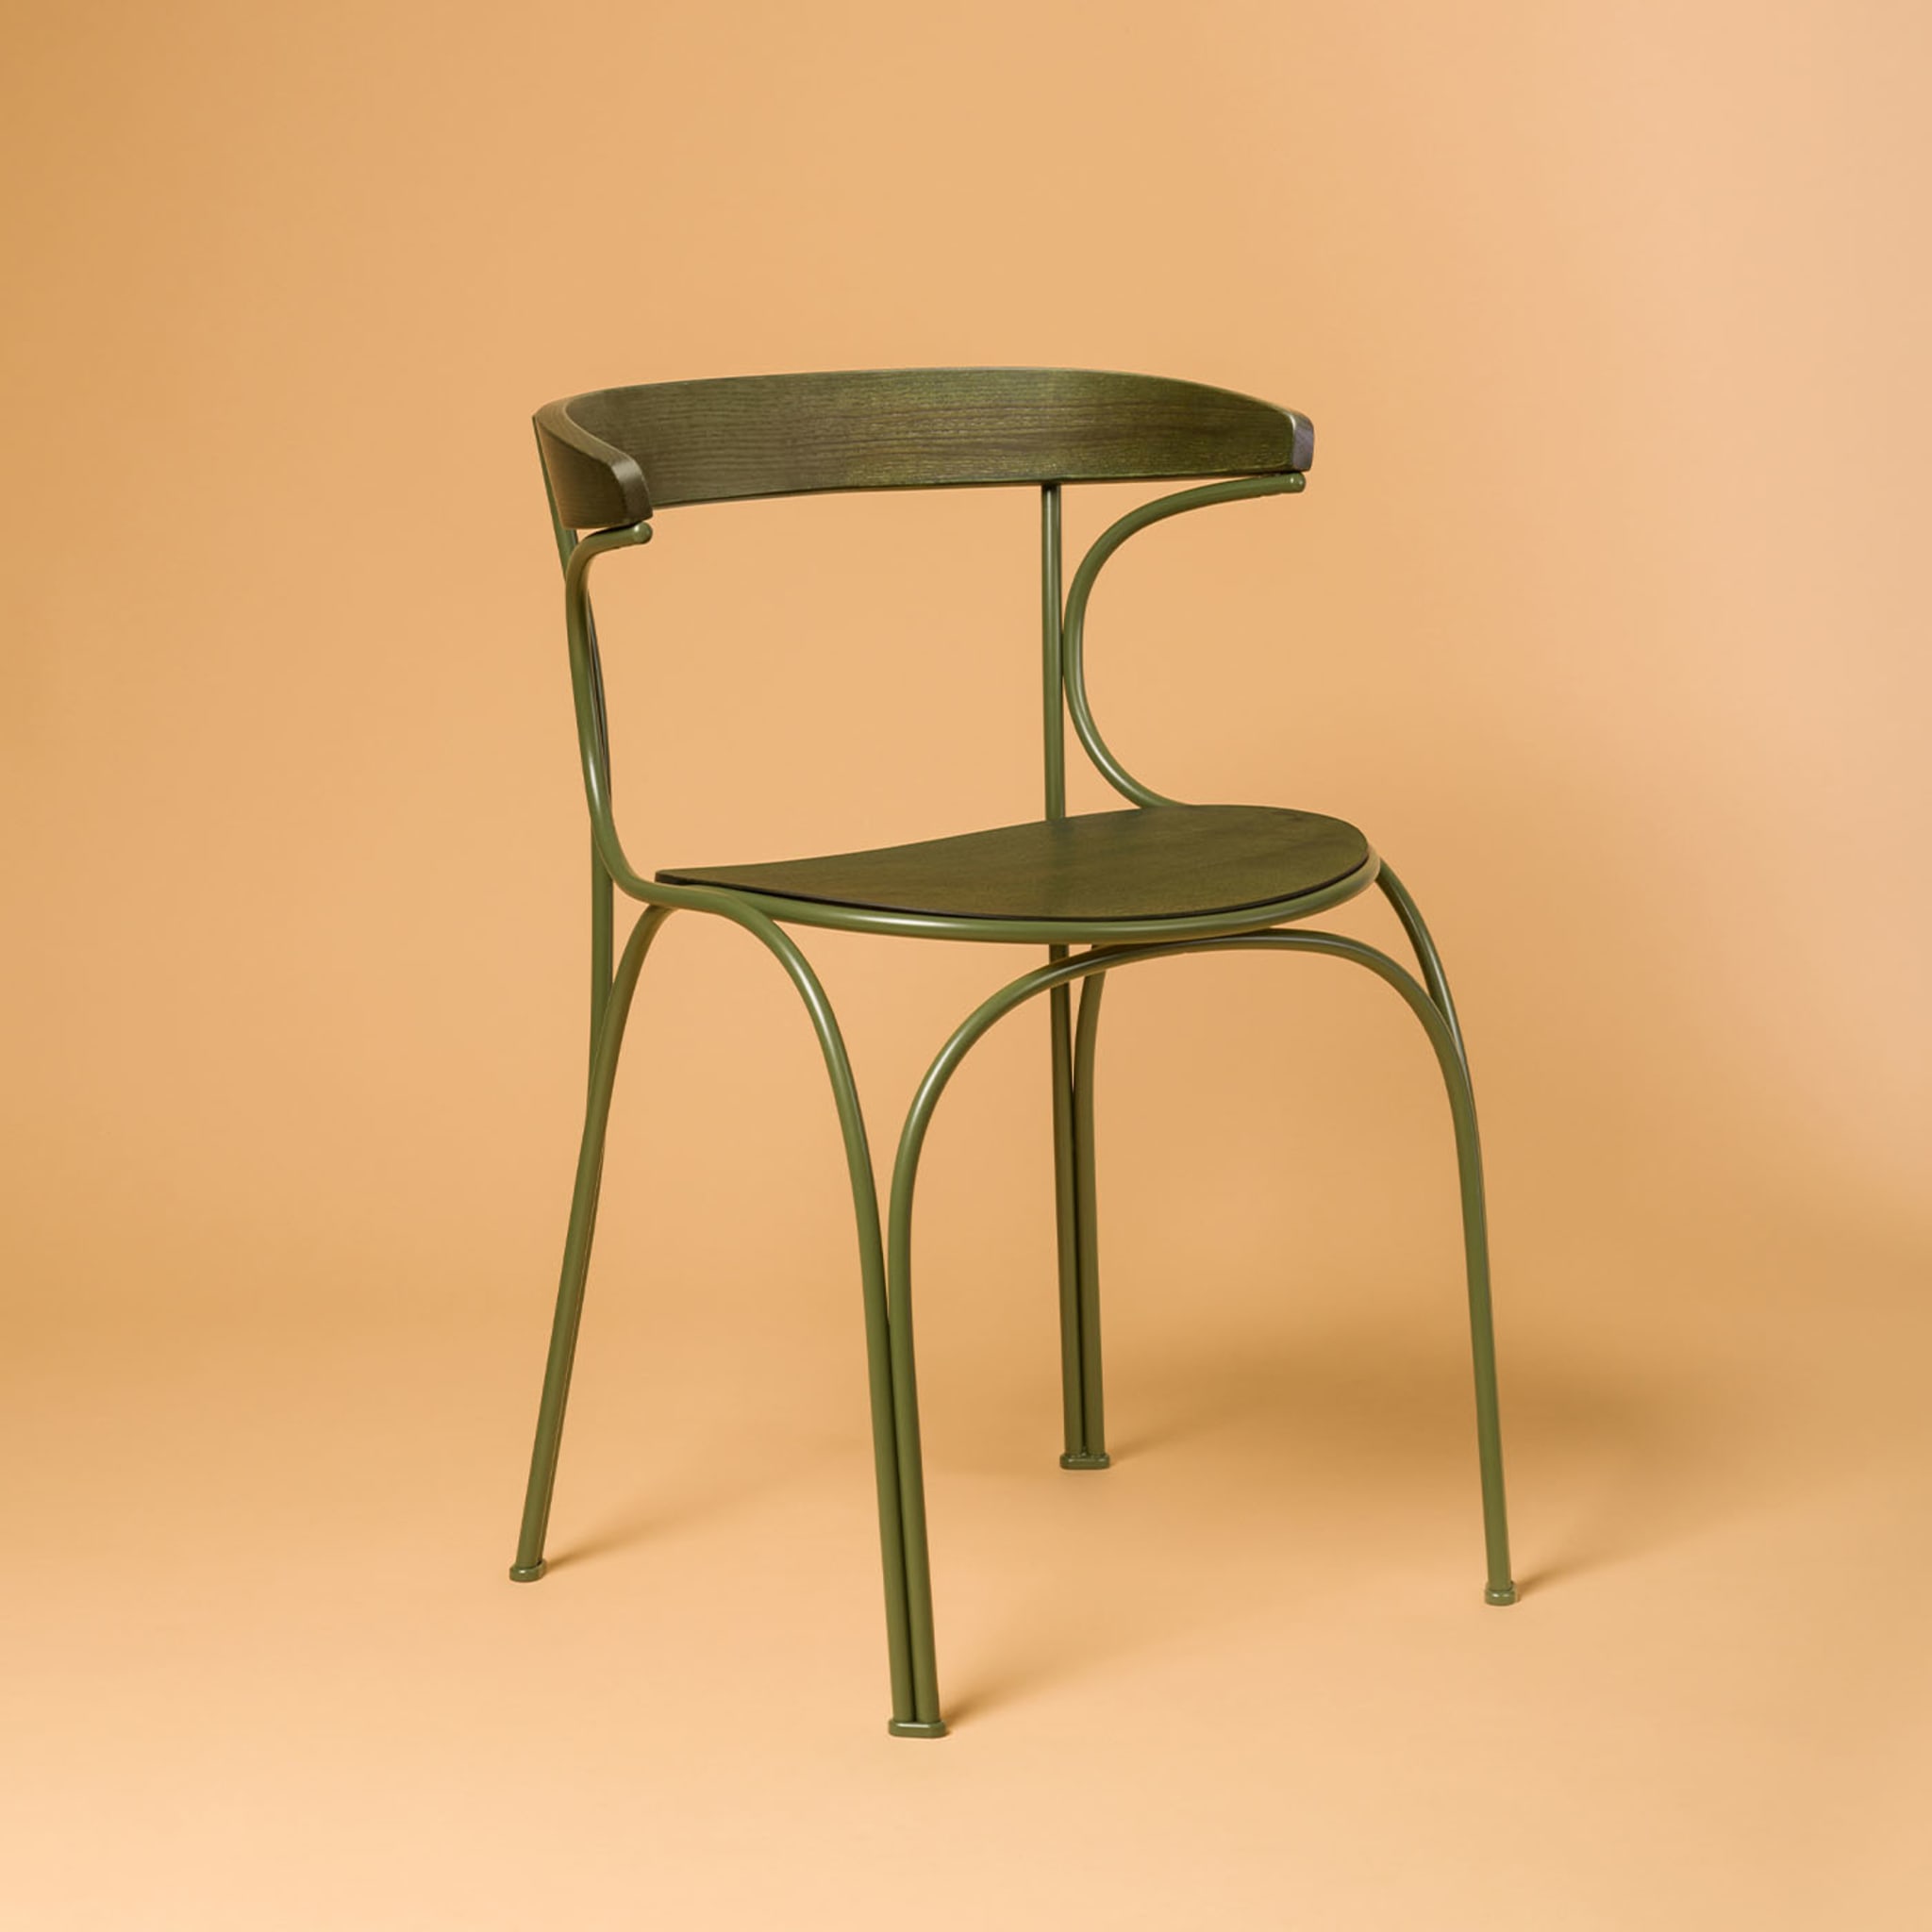 Ample Green Chair by Nichetto Studio - Alternative view 1